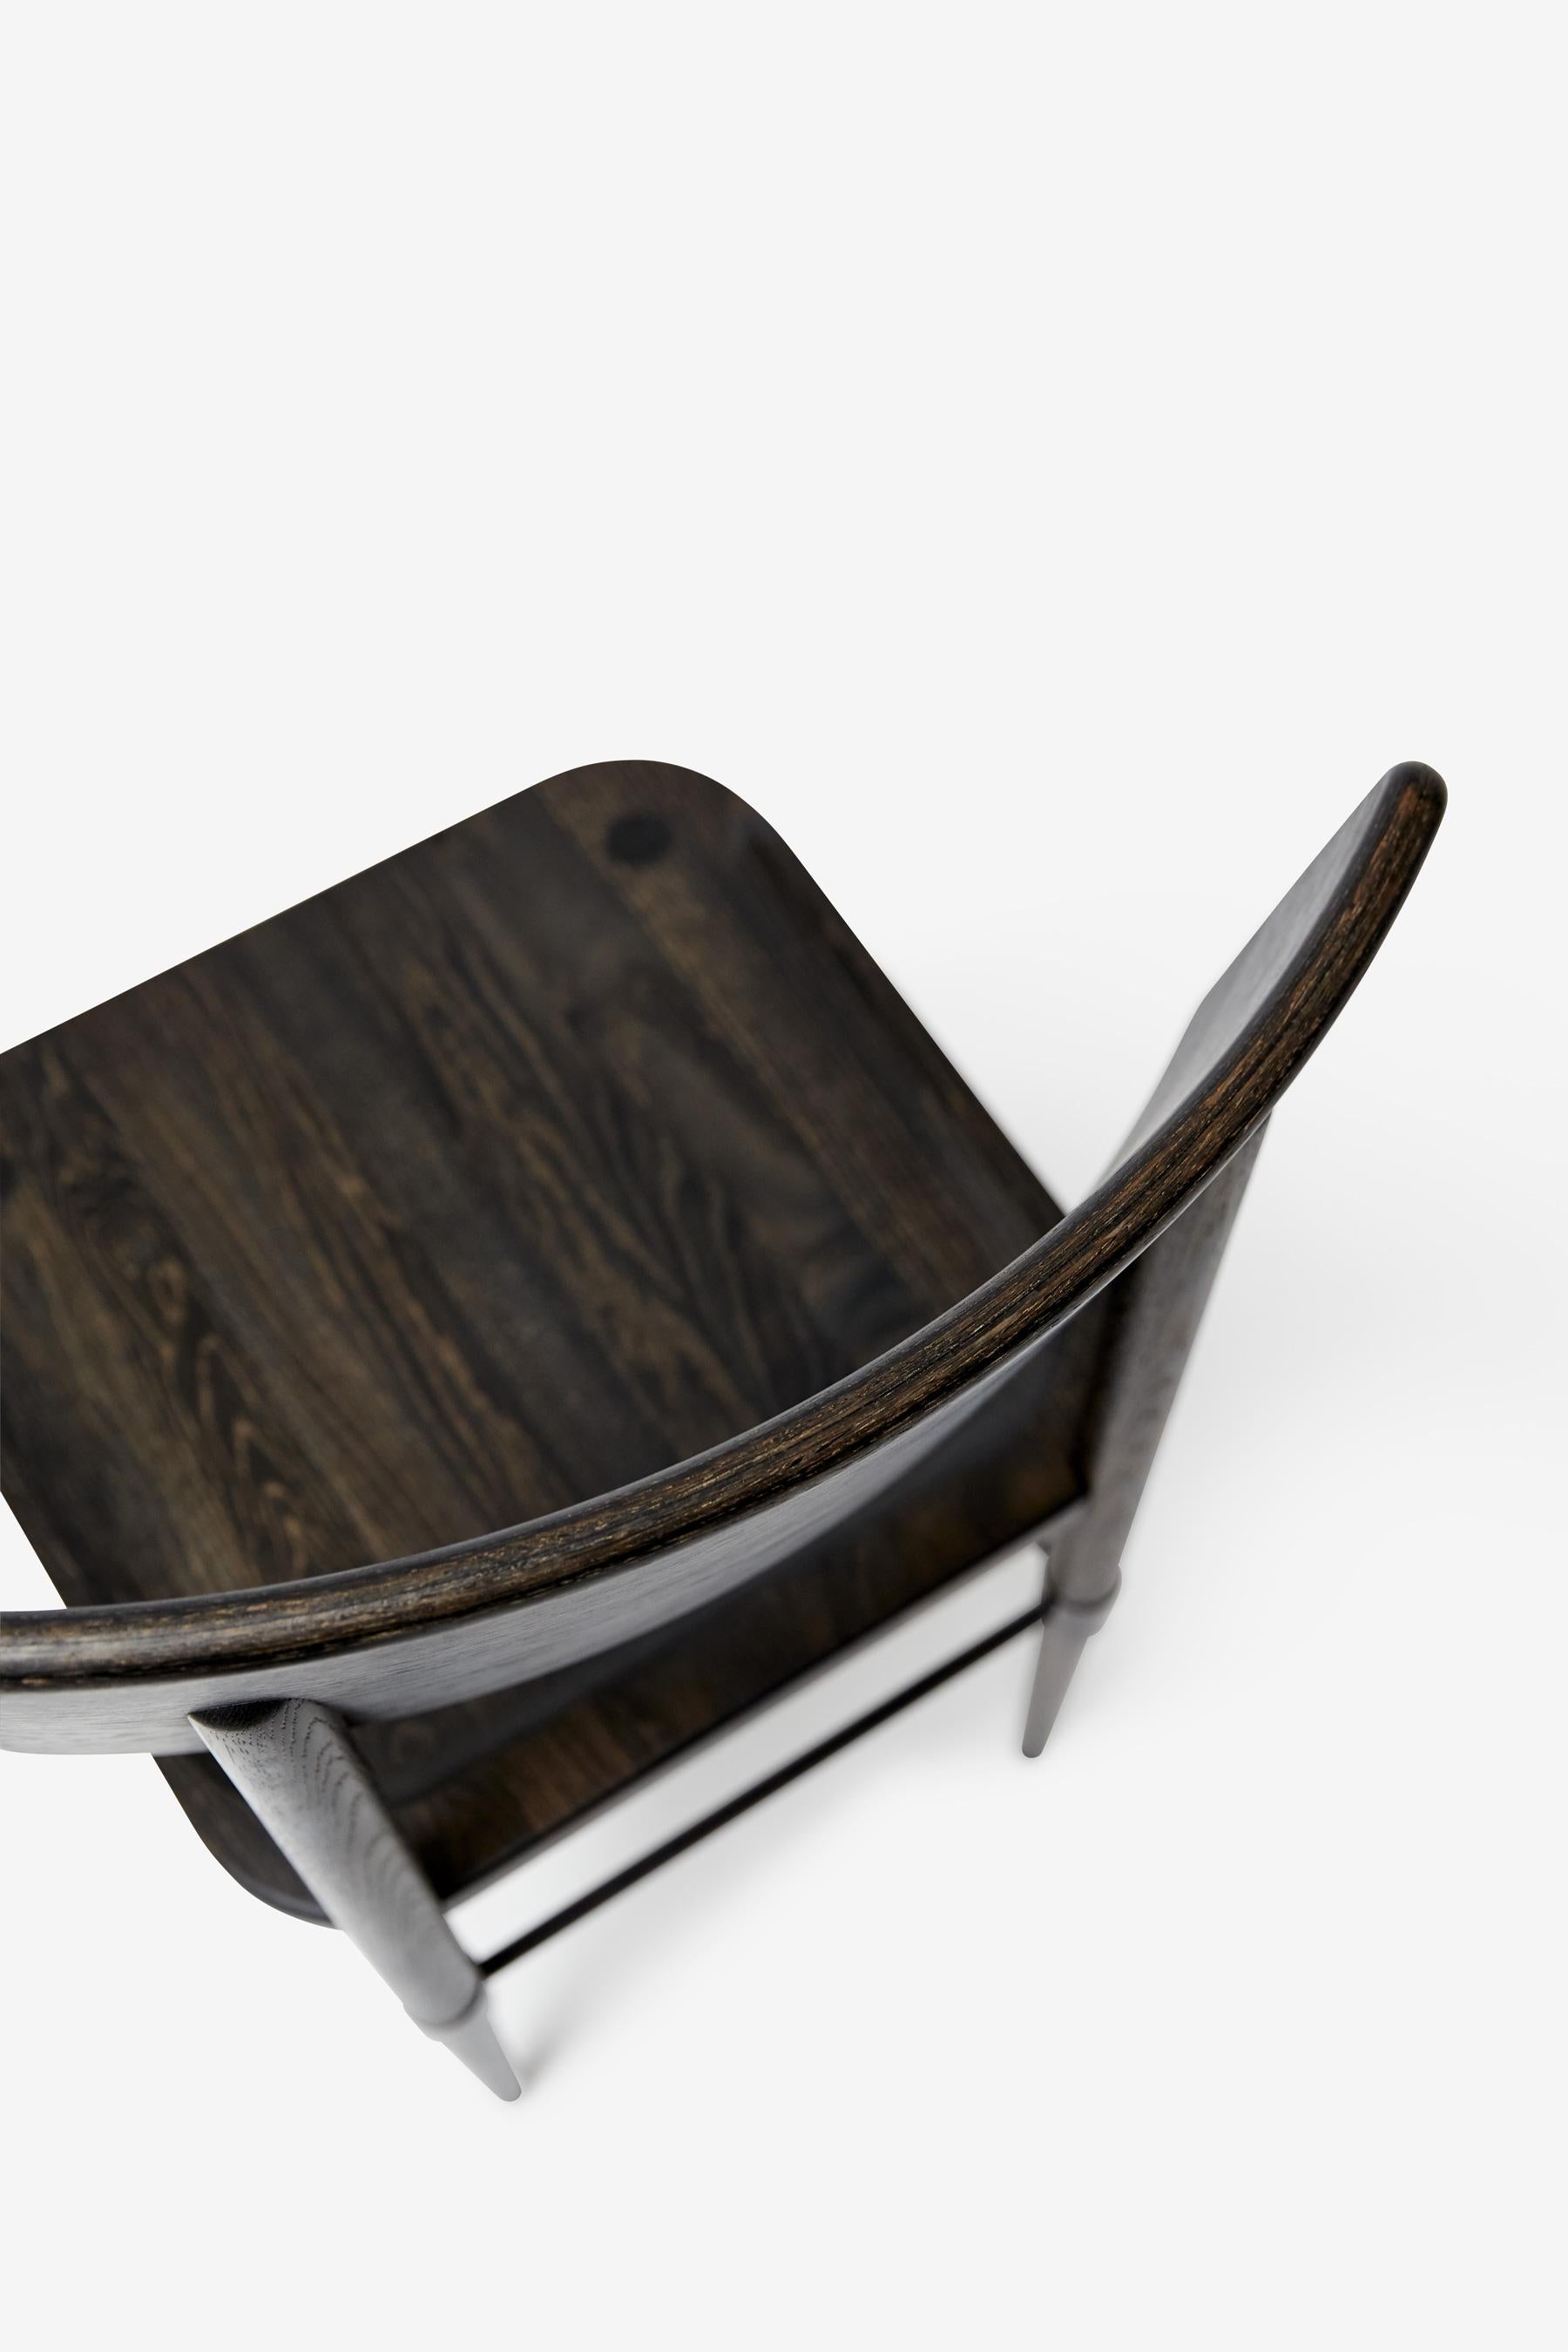 MG101 Dining chair in dark oak by Malte Gormsen Design by Space Copenhagen For Sale 1